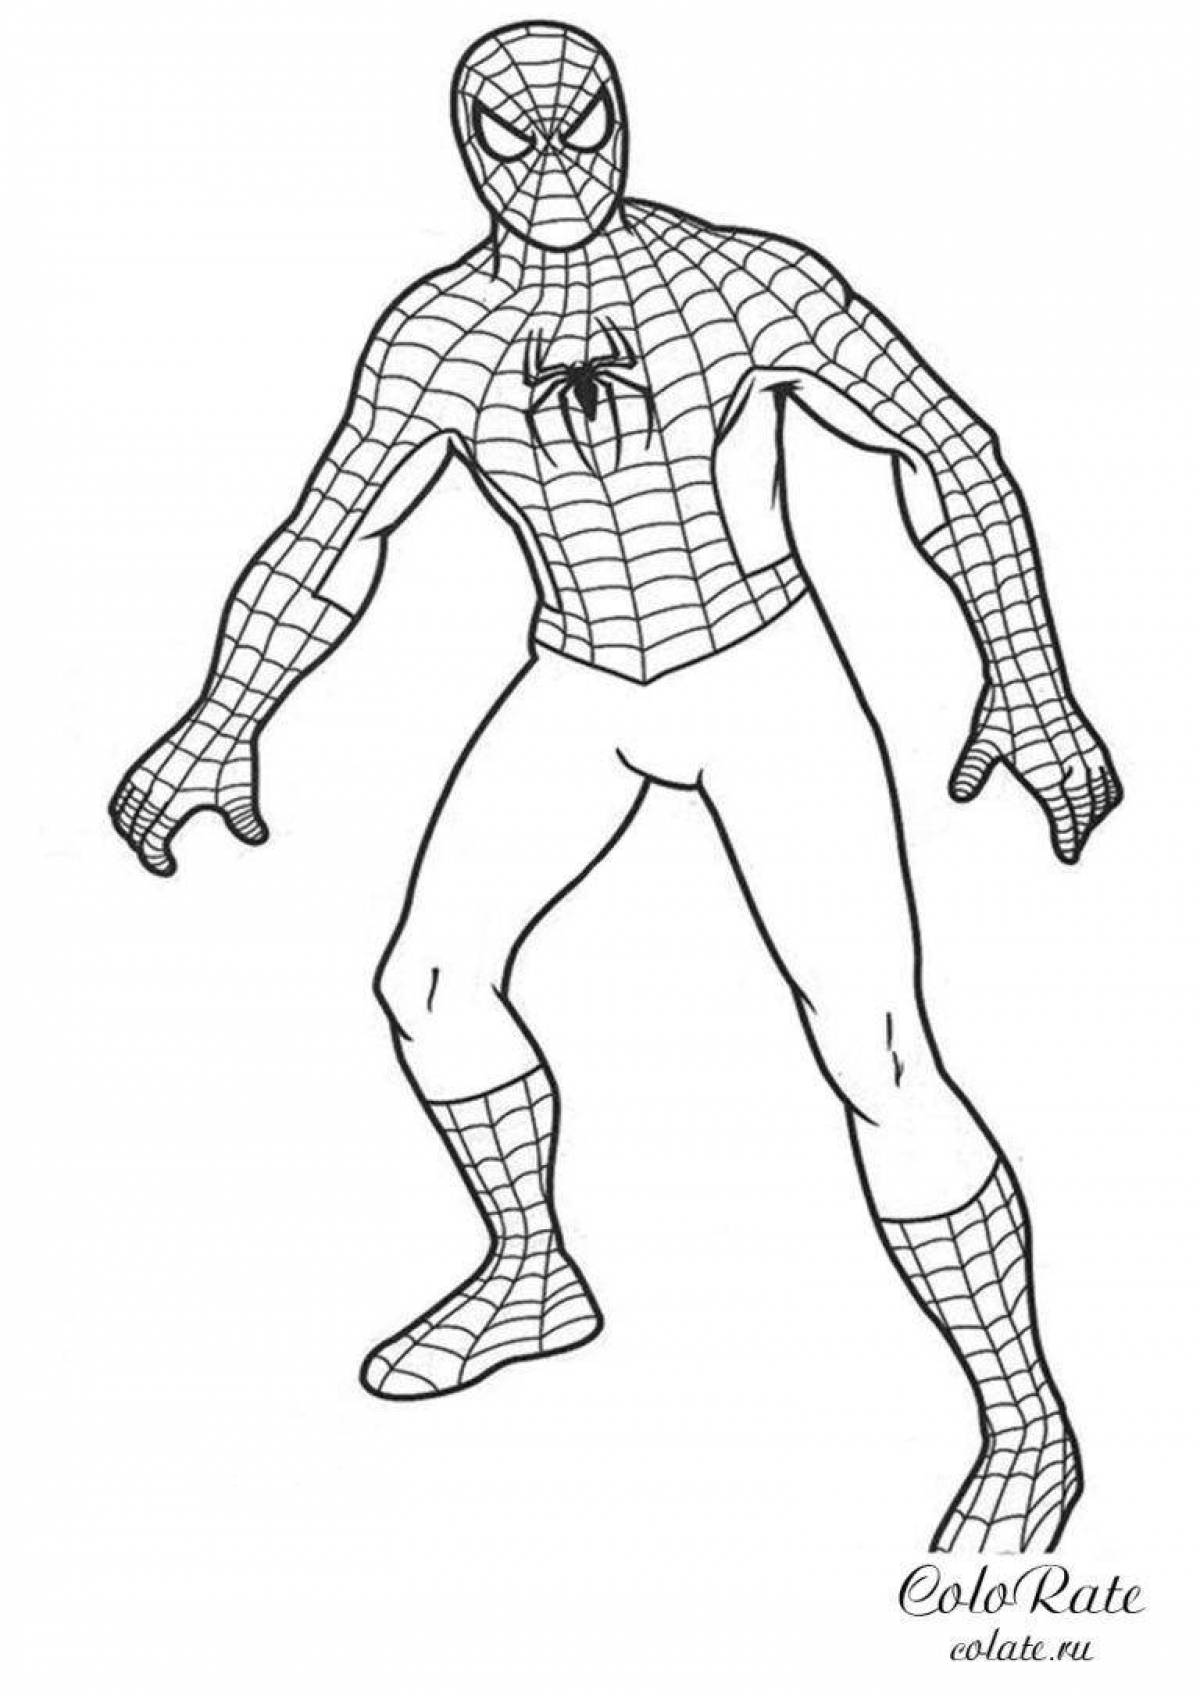 Spiderman dynamic drawing